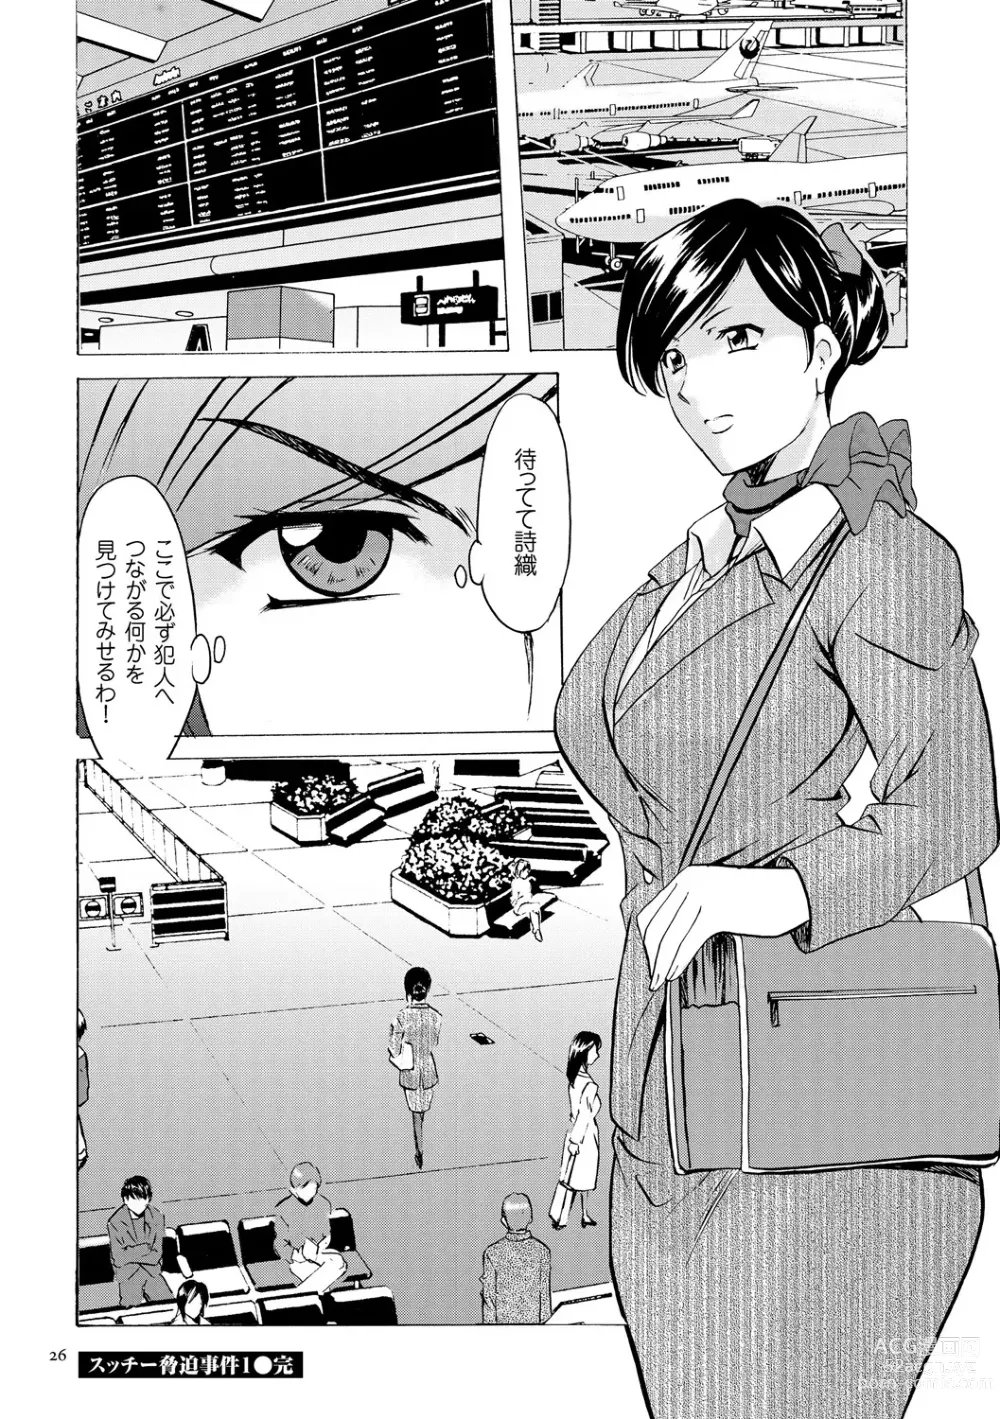 Page 26 of manga Sennyu Tsuma Satomi Kiroku